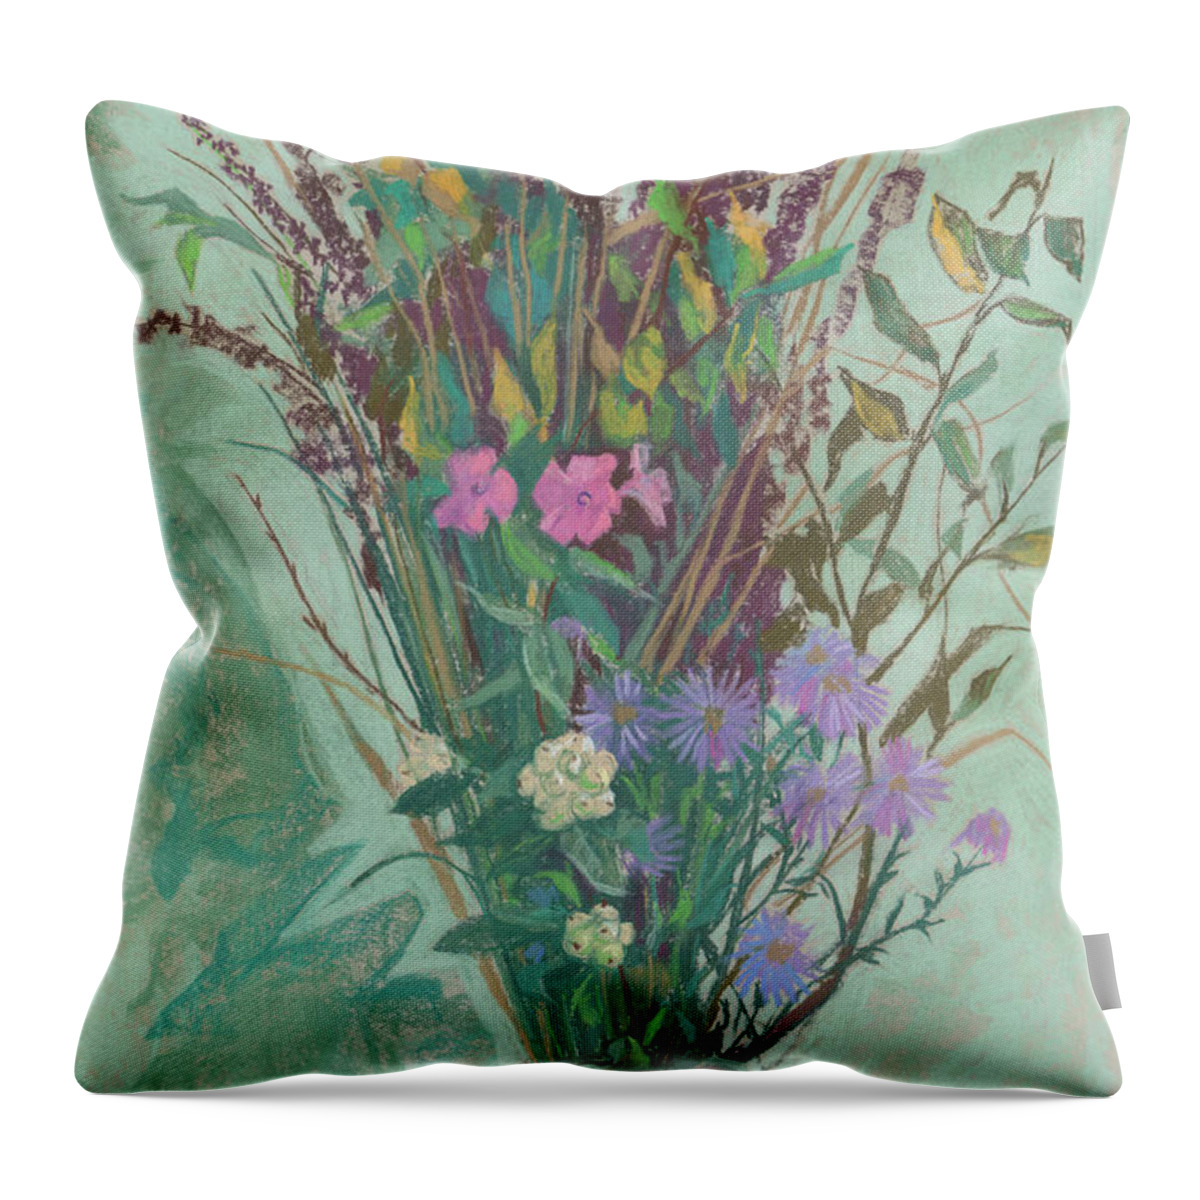 Original Art Throw Pillow featuring the pastel Autumn flowers by Julia Khoroshikh